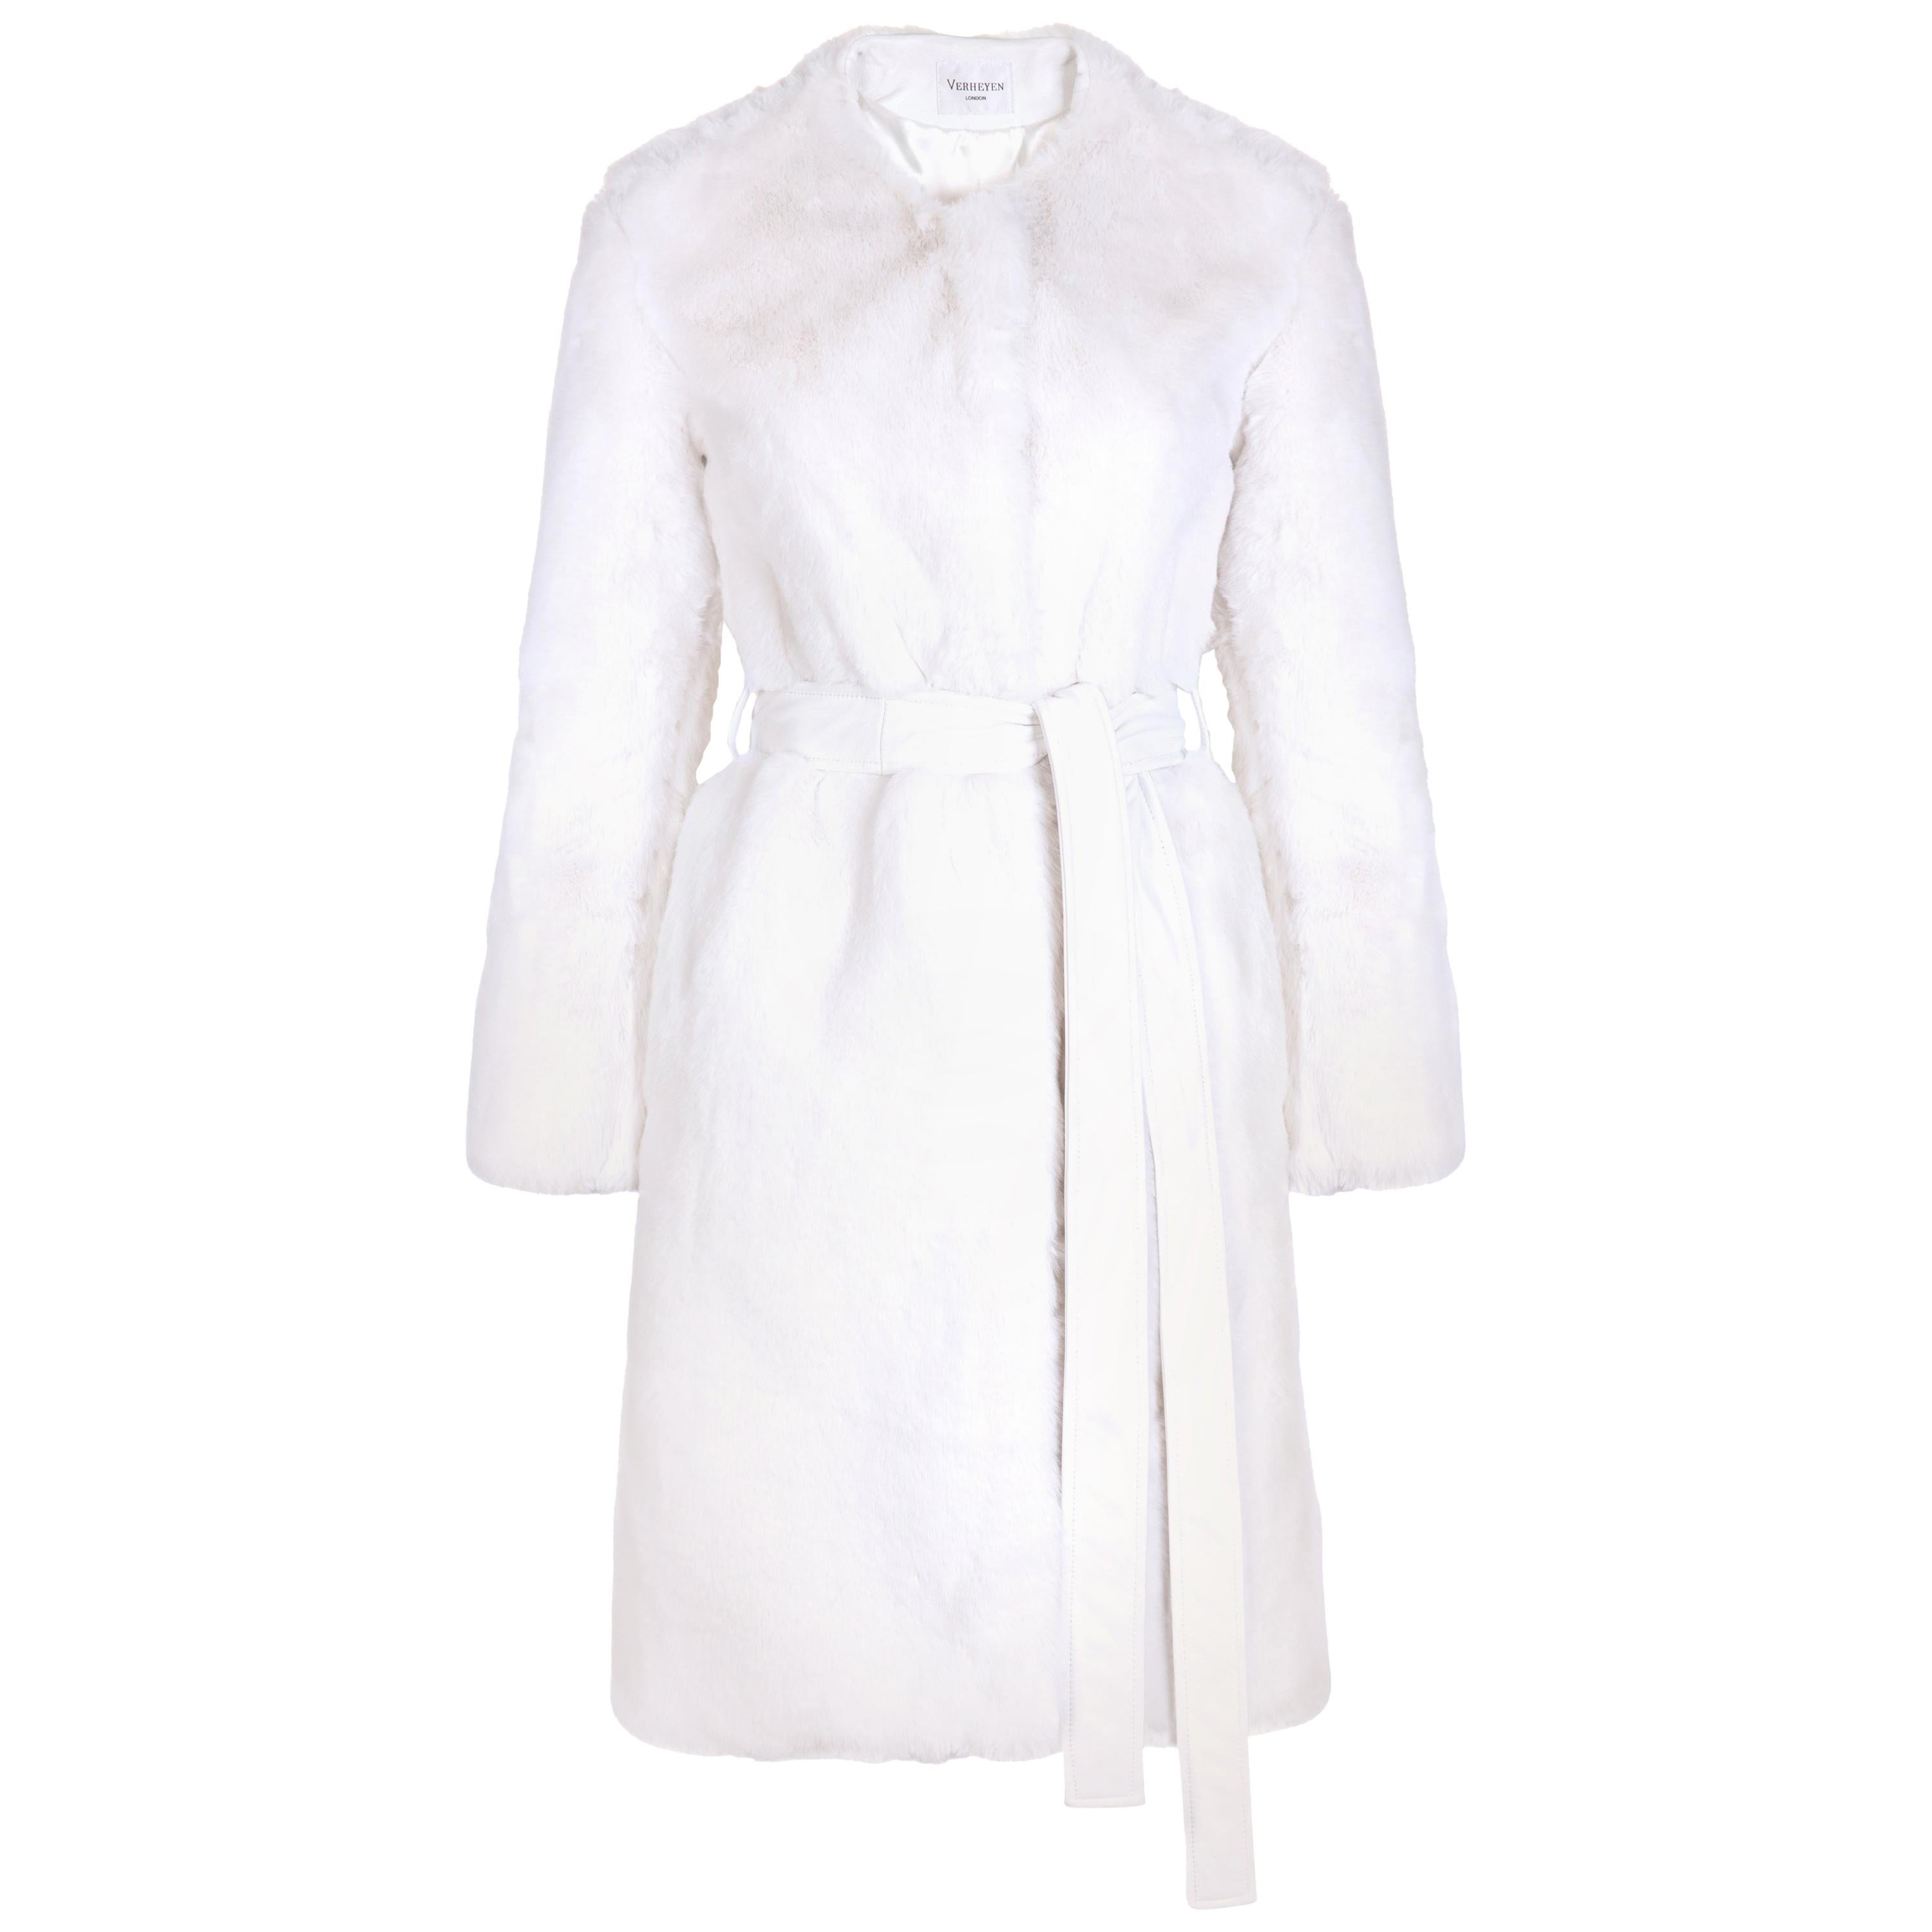 Verheyen London Serena  Collarless Faux Fur Coat in White - Size uk 6